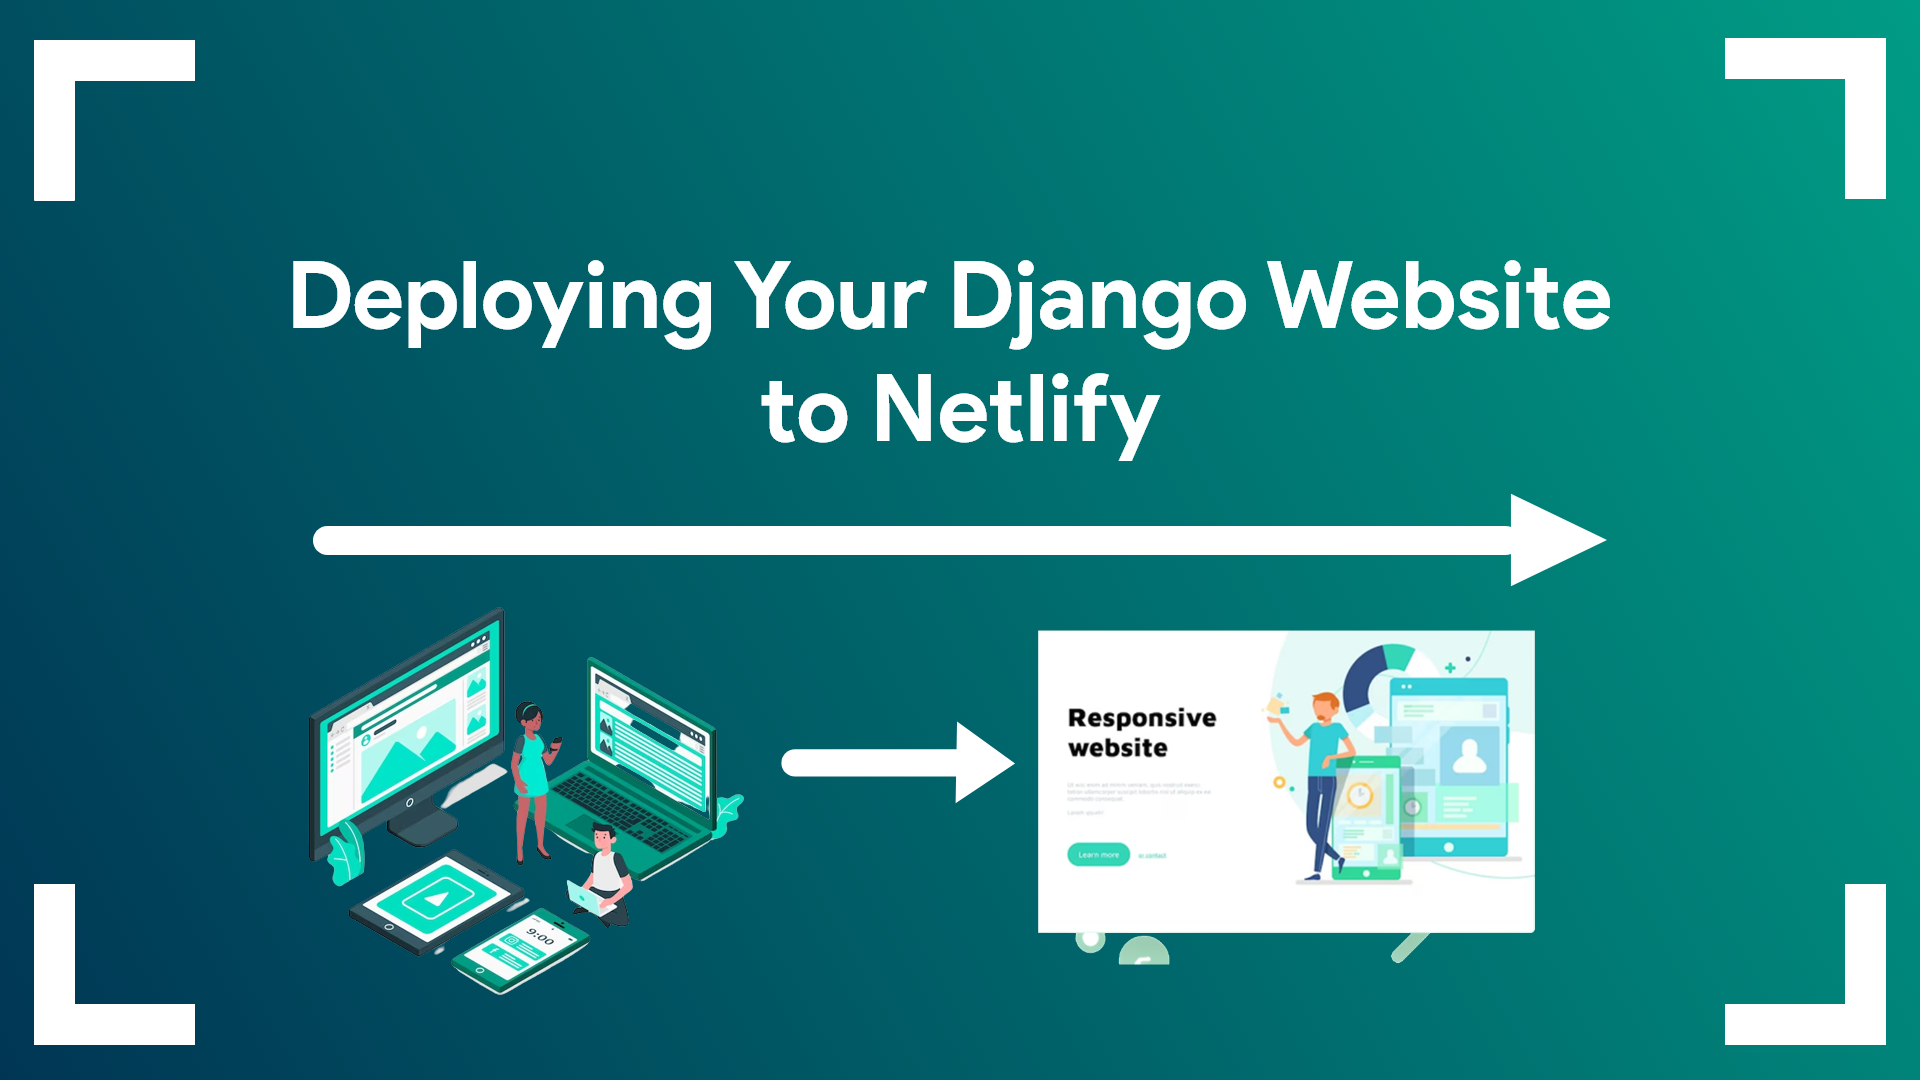 How to Deploy Your Django Website to Netlify